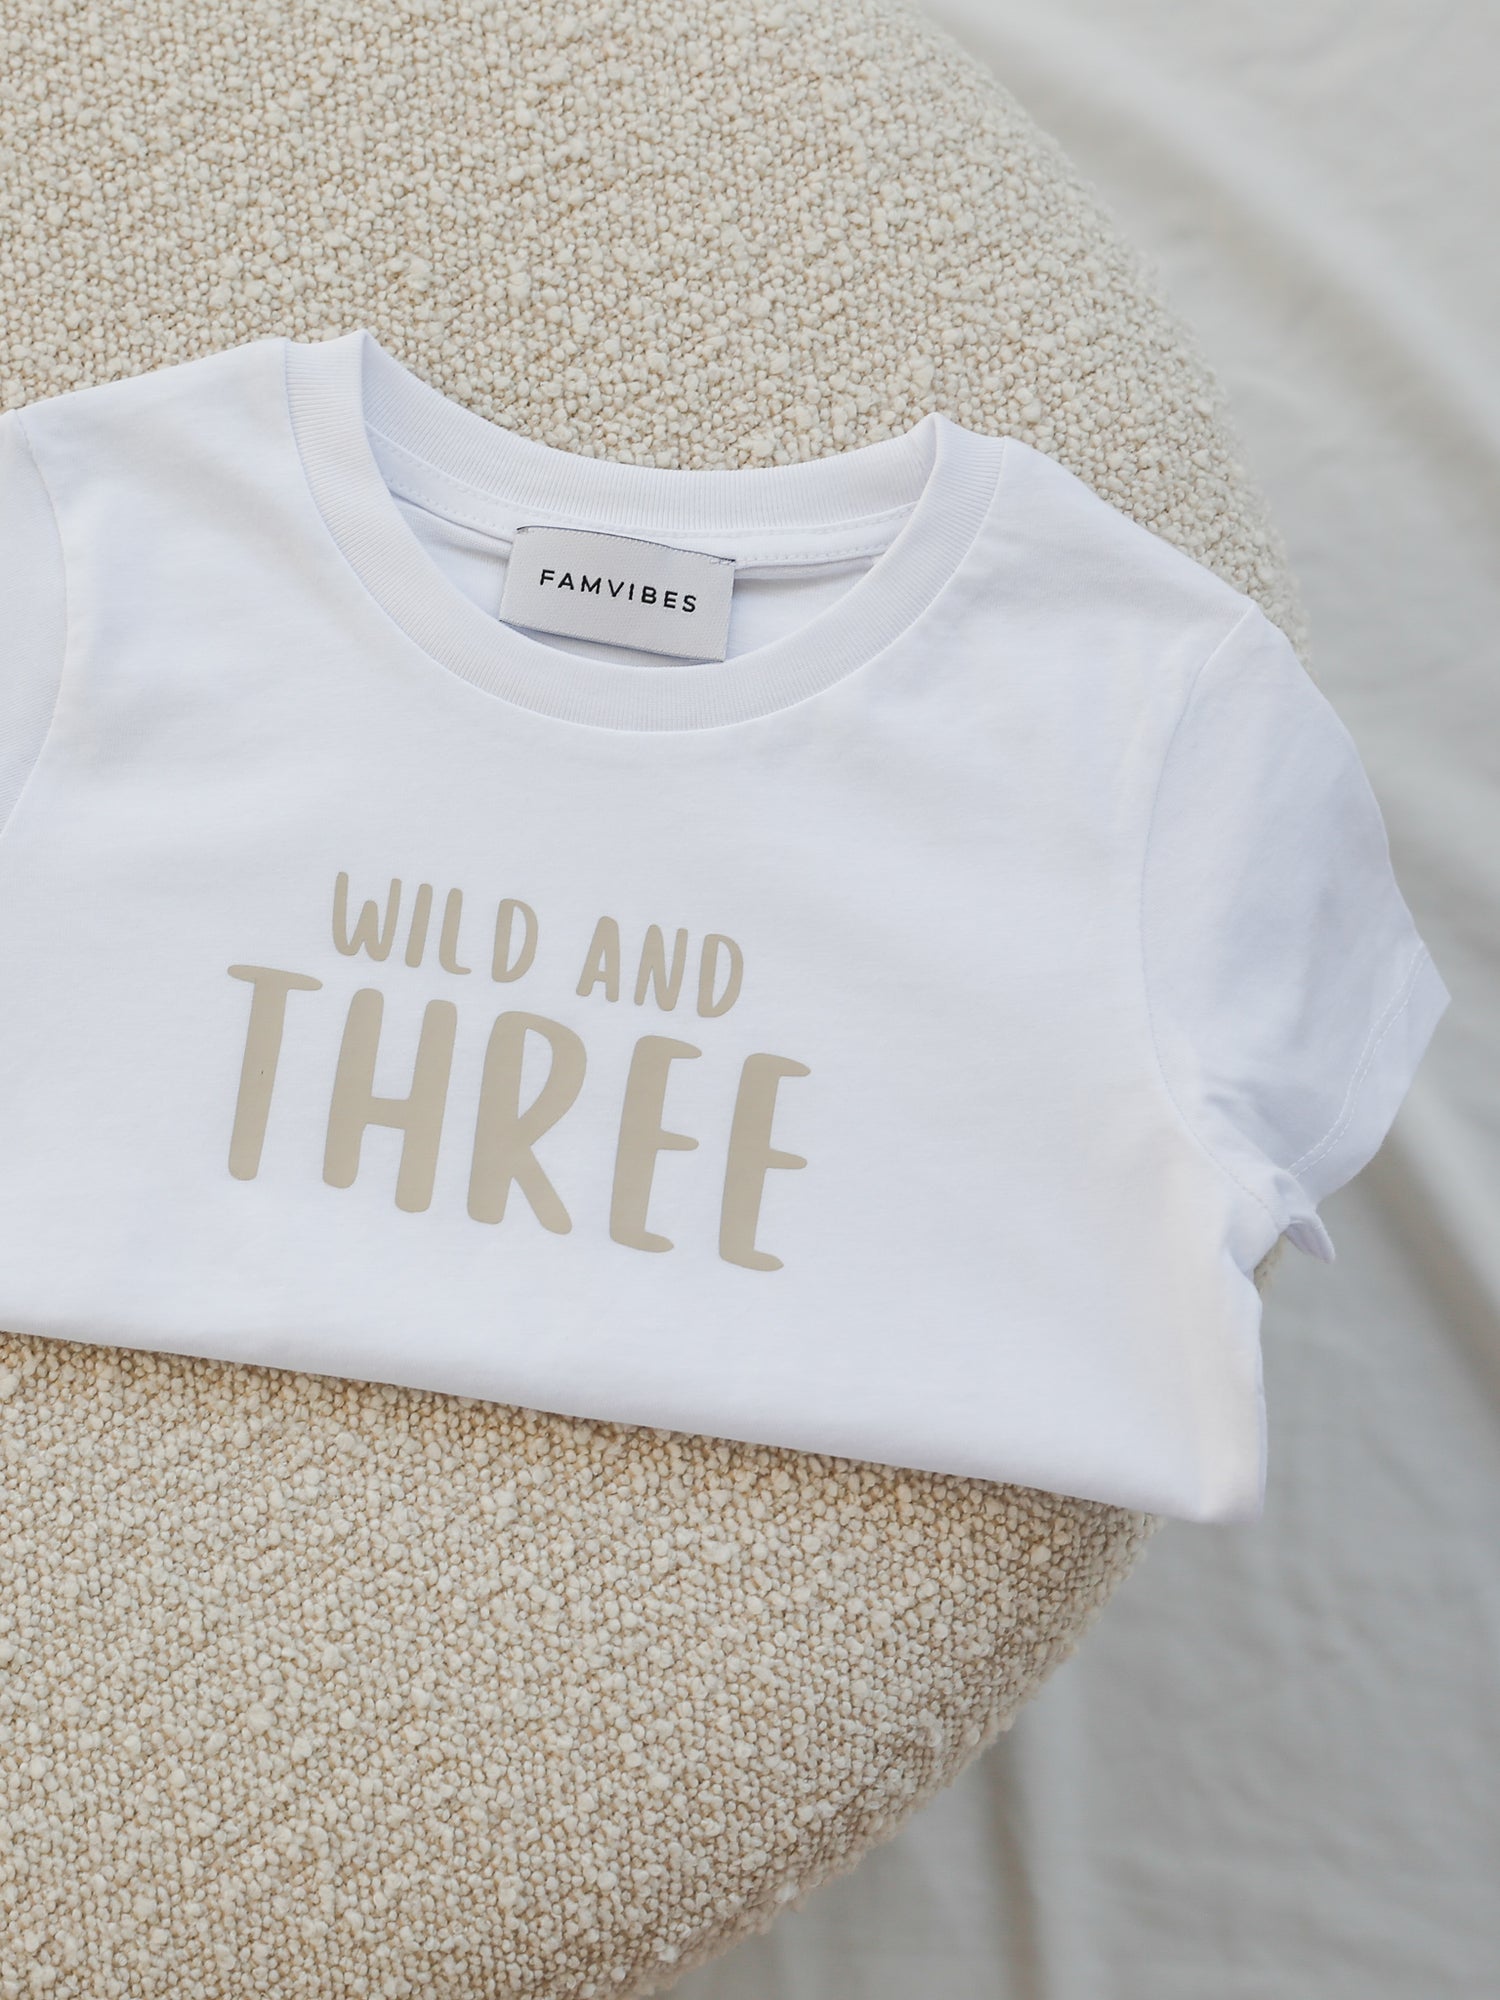 THREE - Kids Meilenstein T-Shirt - FAMVIBES 